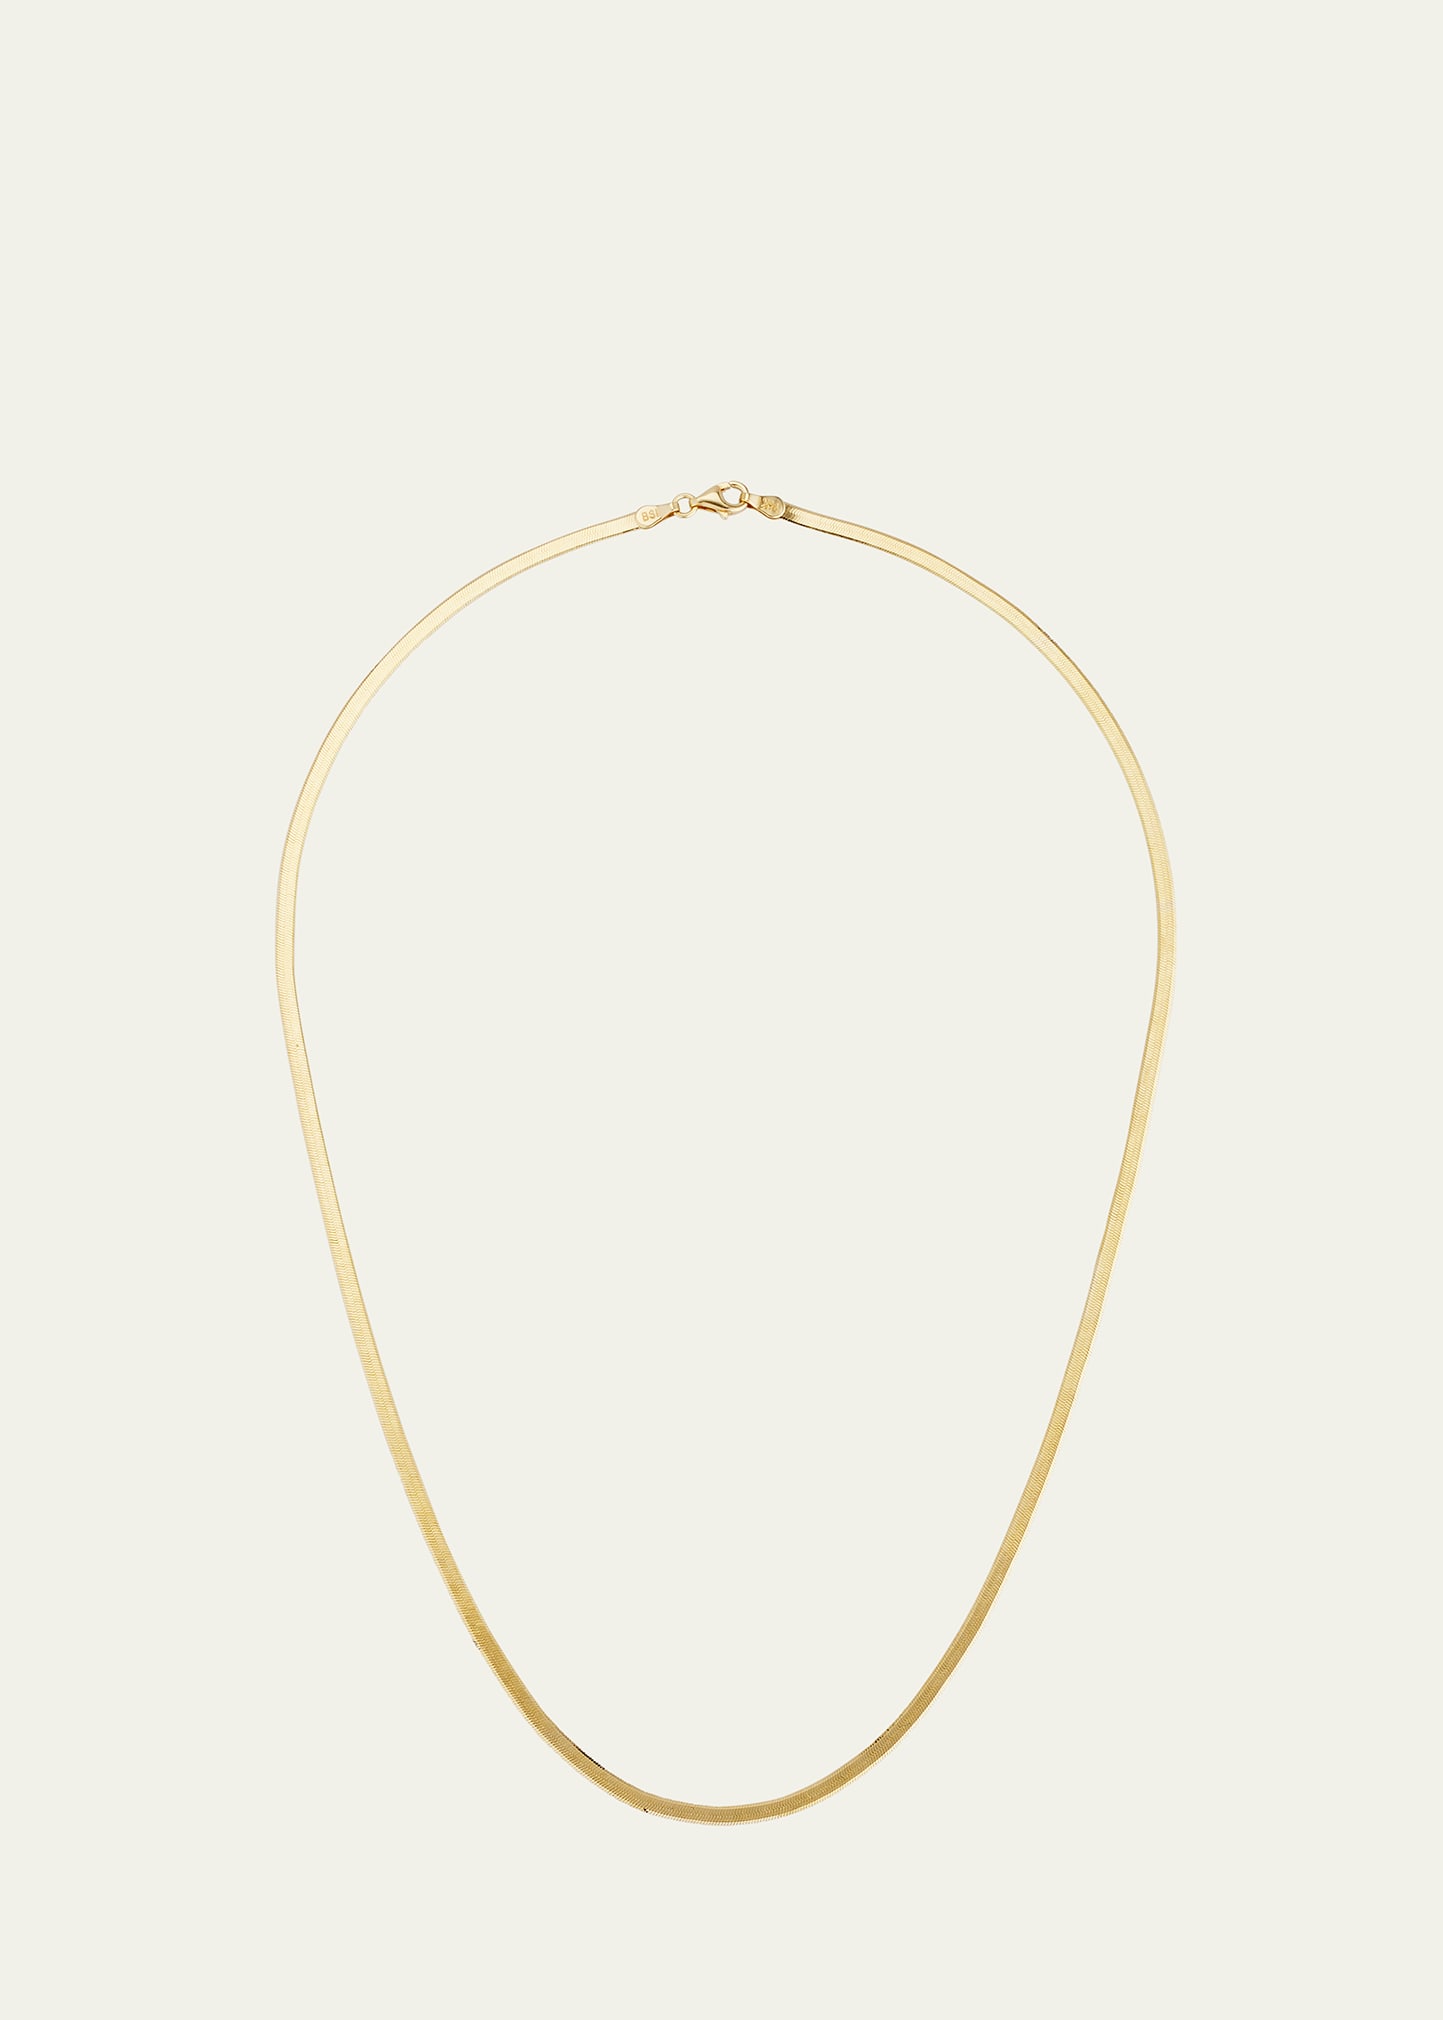 V.bellan Skinny Herringbone Chain In 14k Yellow Gold